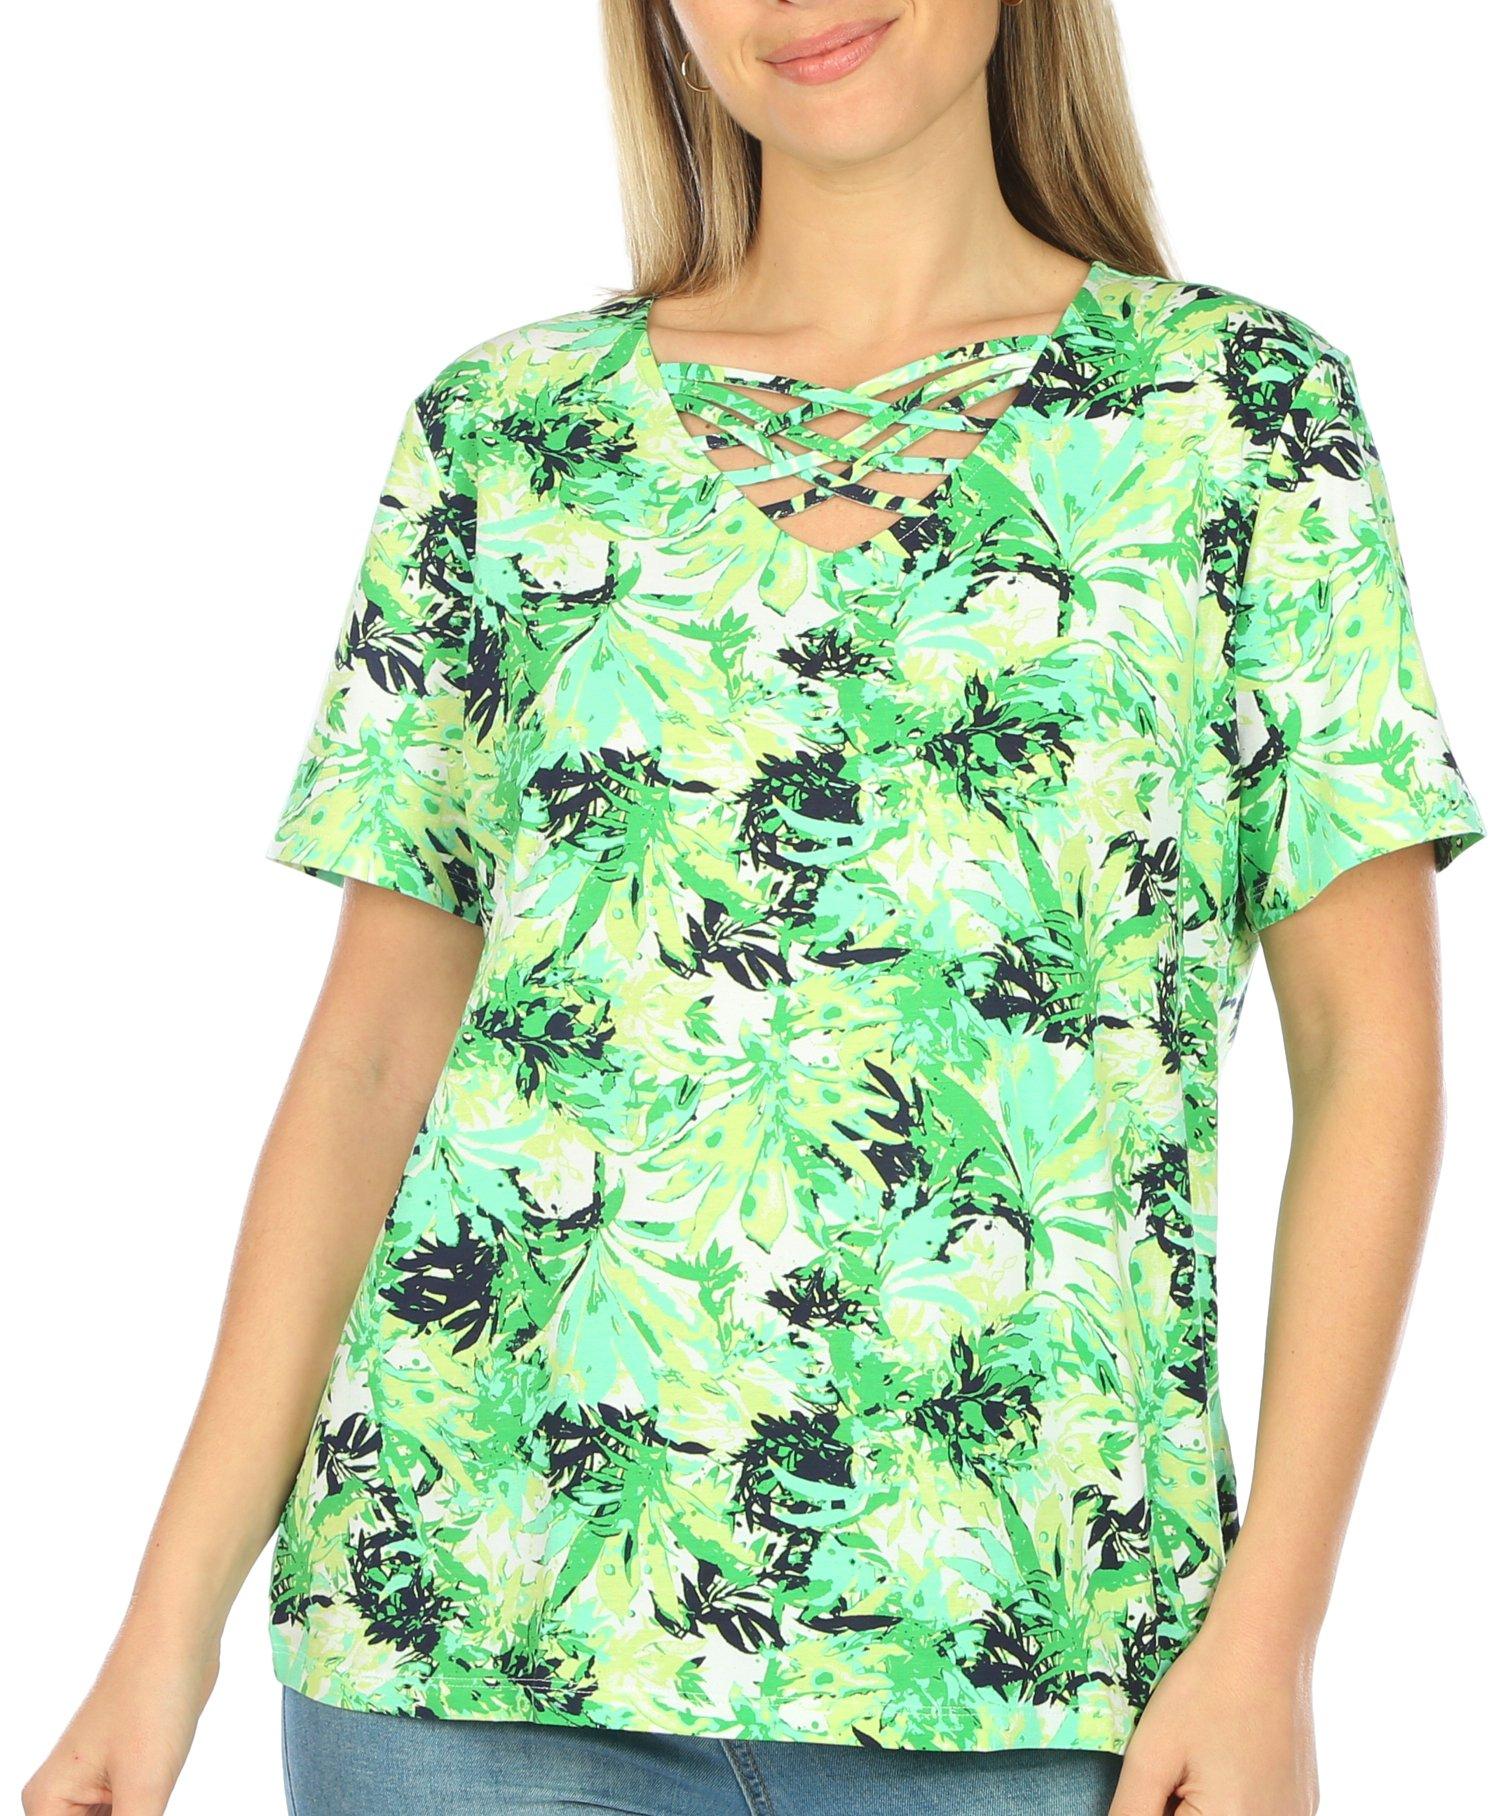 Coral Bay Womens Foliage Crisscross Short Sleeve Top